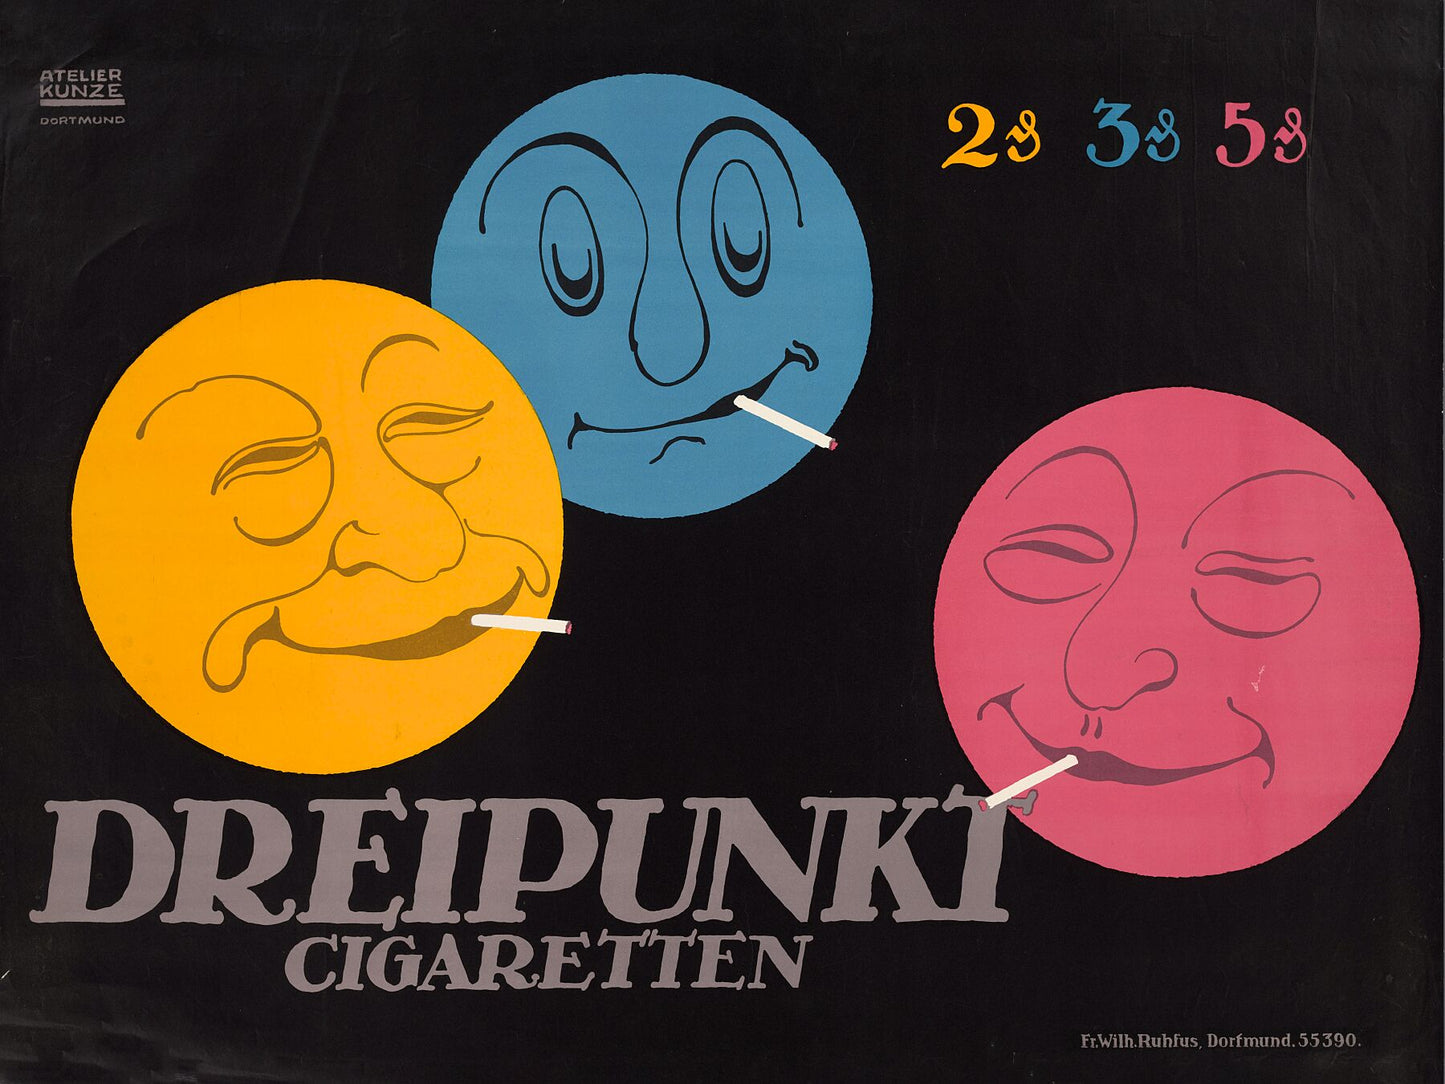 Dreipunkt Cigarettes by Carl Kunze - 1913